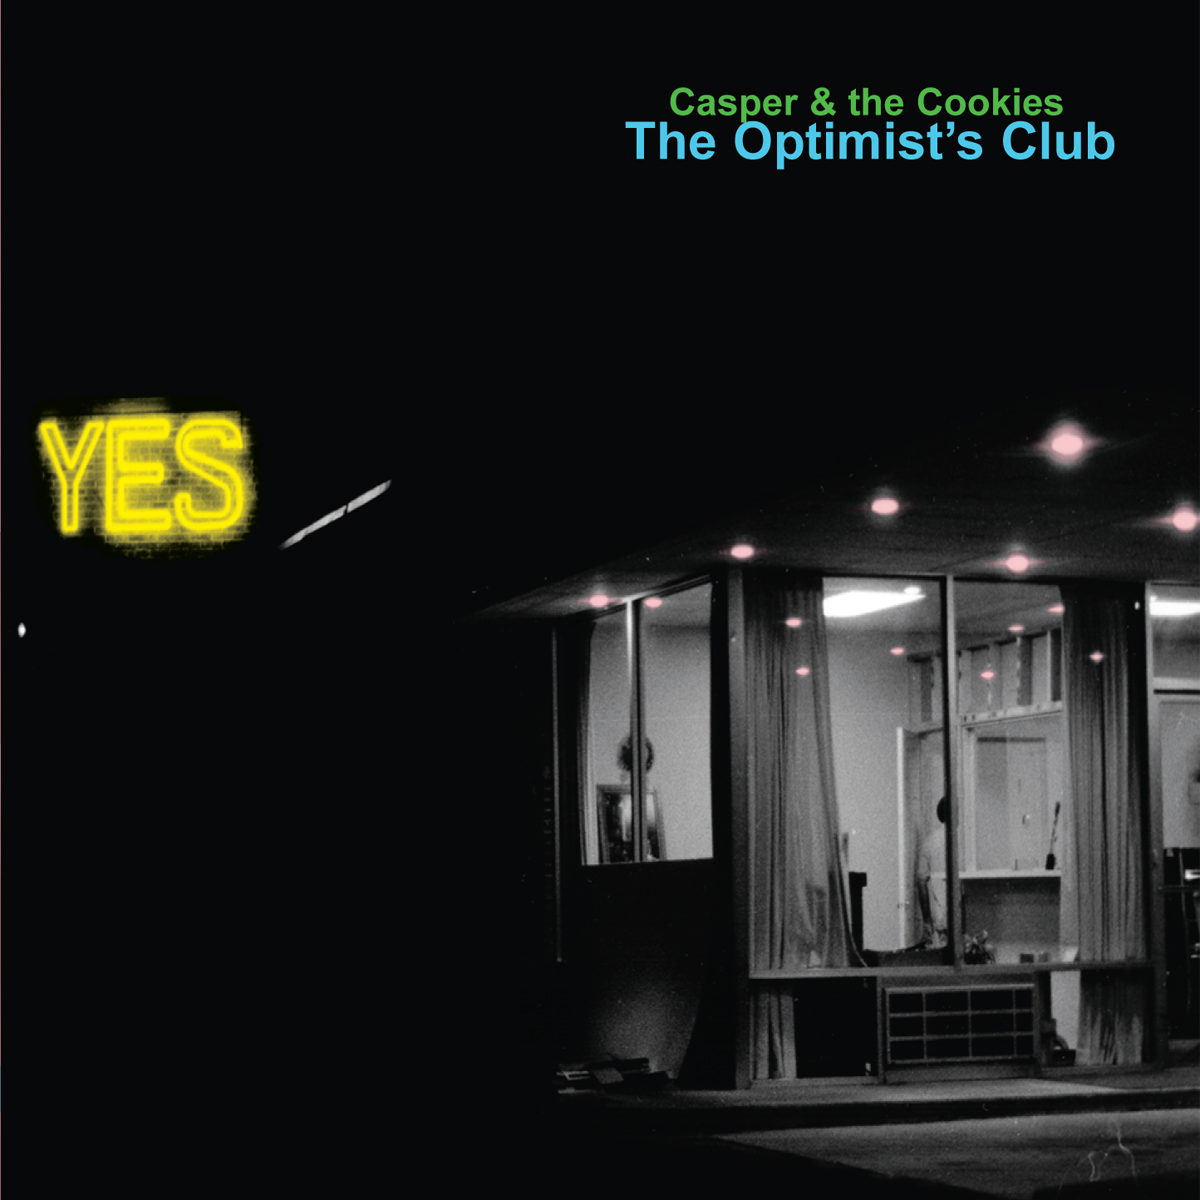 The Optimist's Club